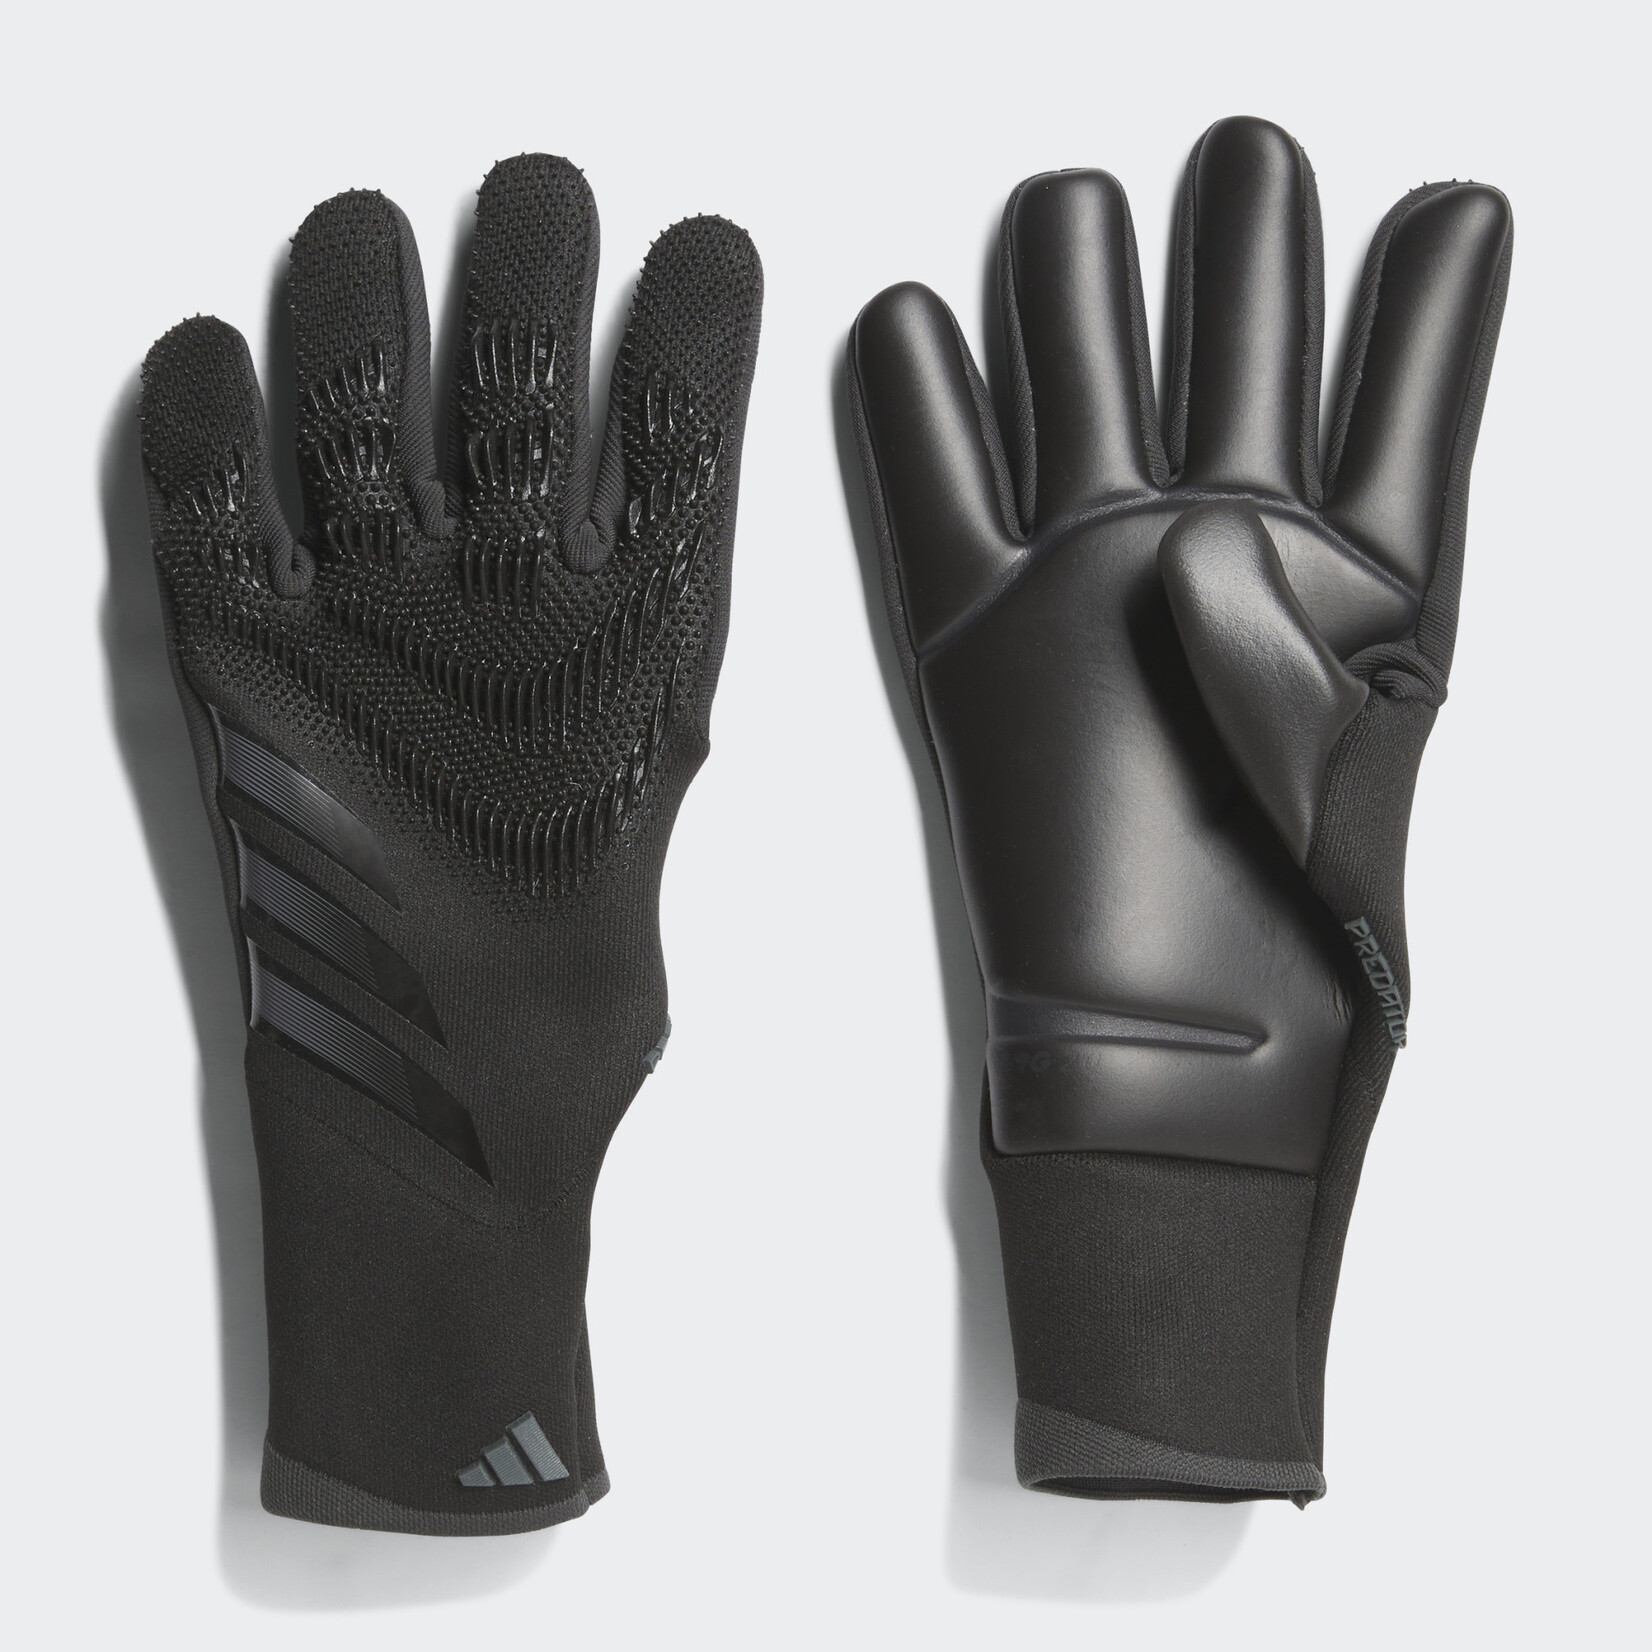 Adidas Predator Pro Goalkeeper Gloves Black/Black